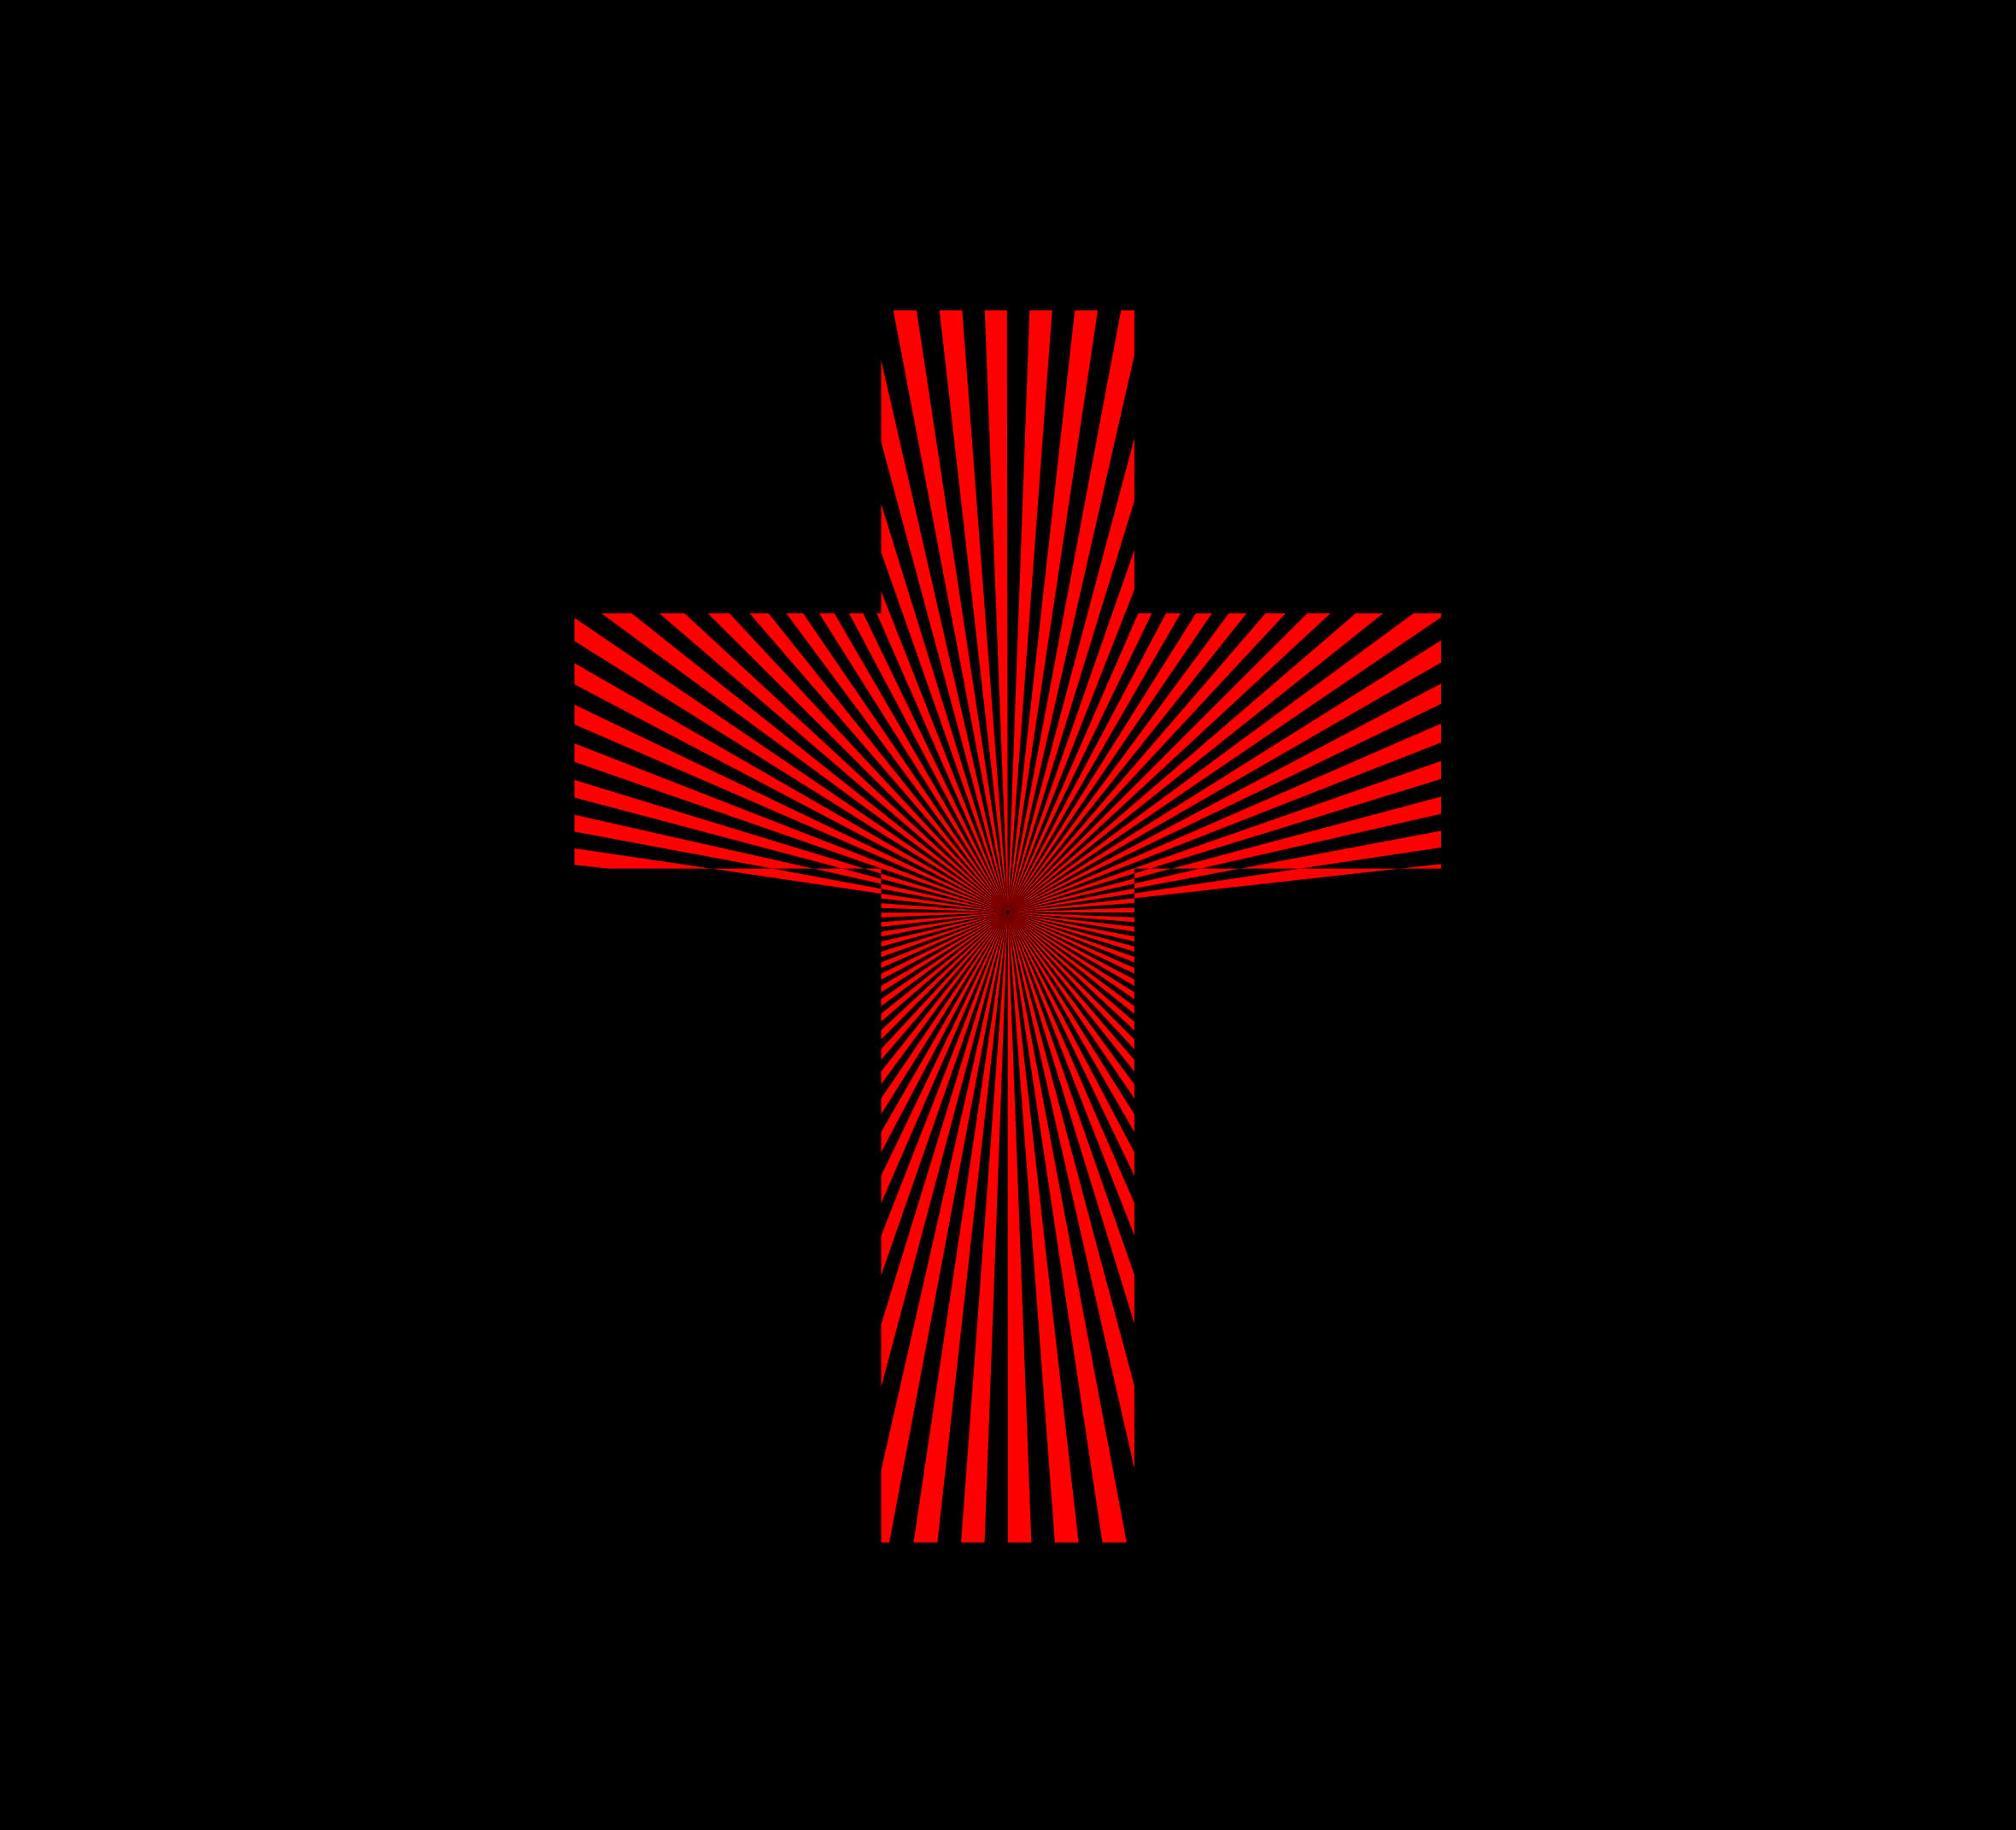 Red Starburst Cross Optical Illusion